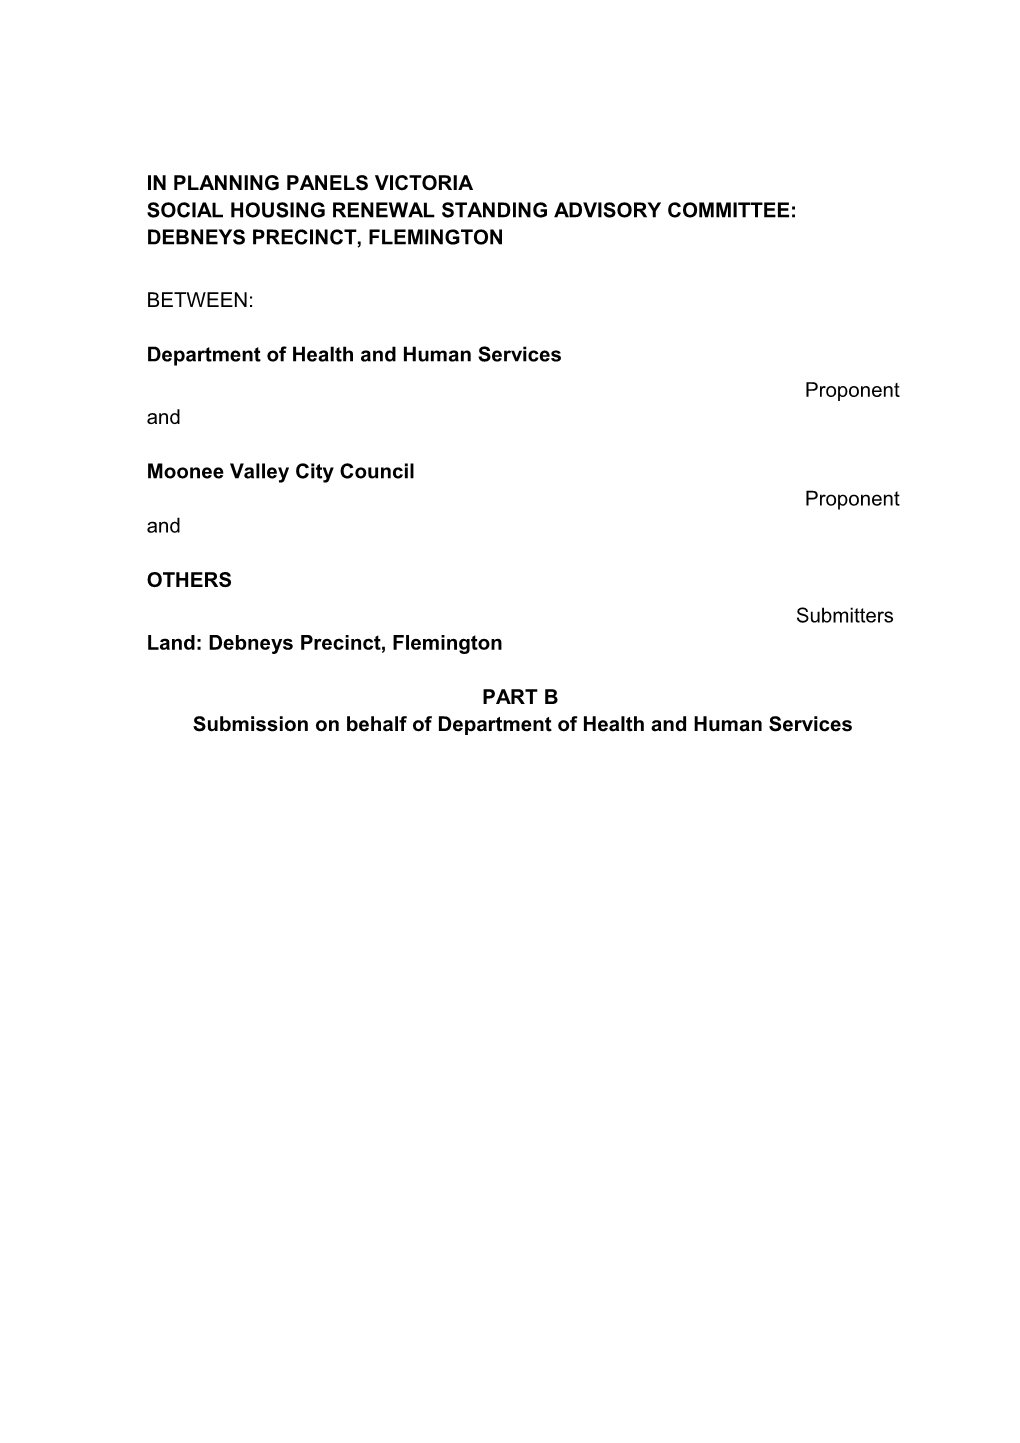 Social Housing Renewal Standing Advisory Committee: Debneys Precinct, Flemington